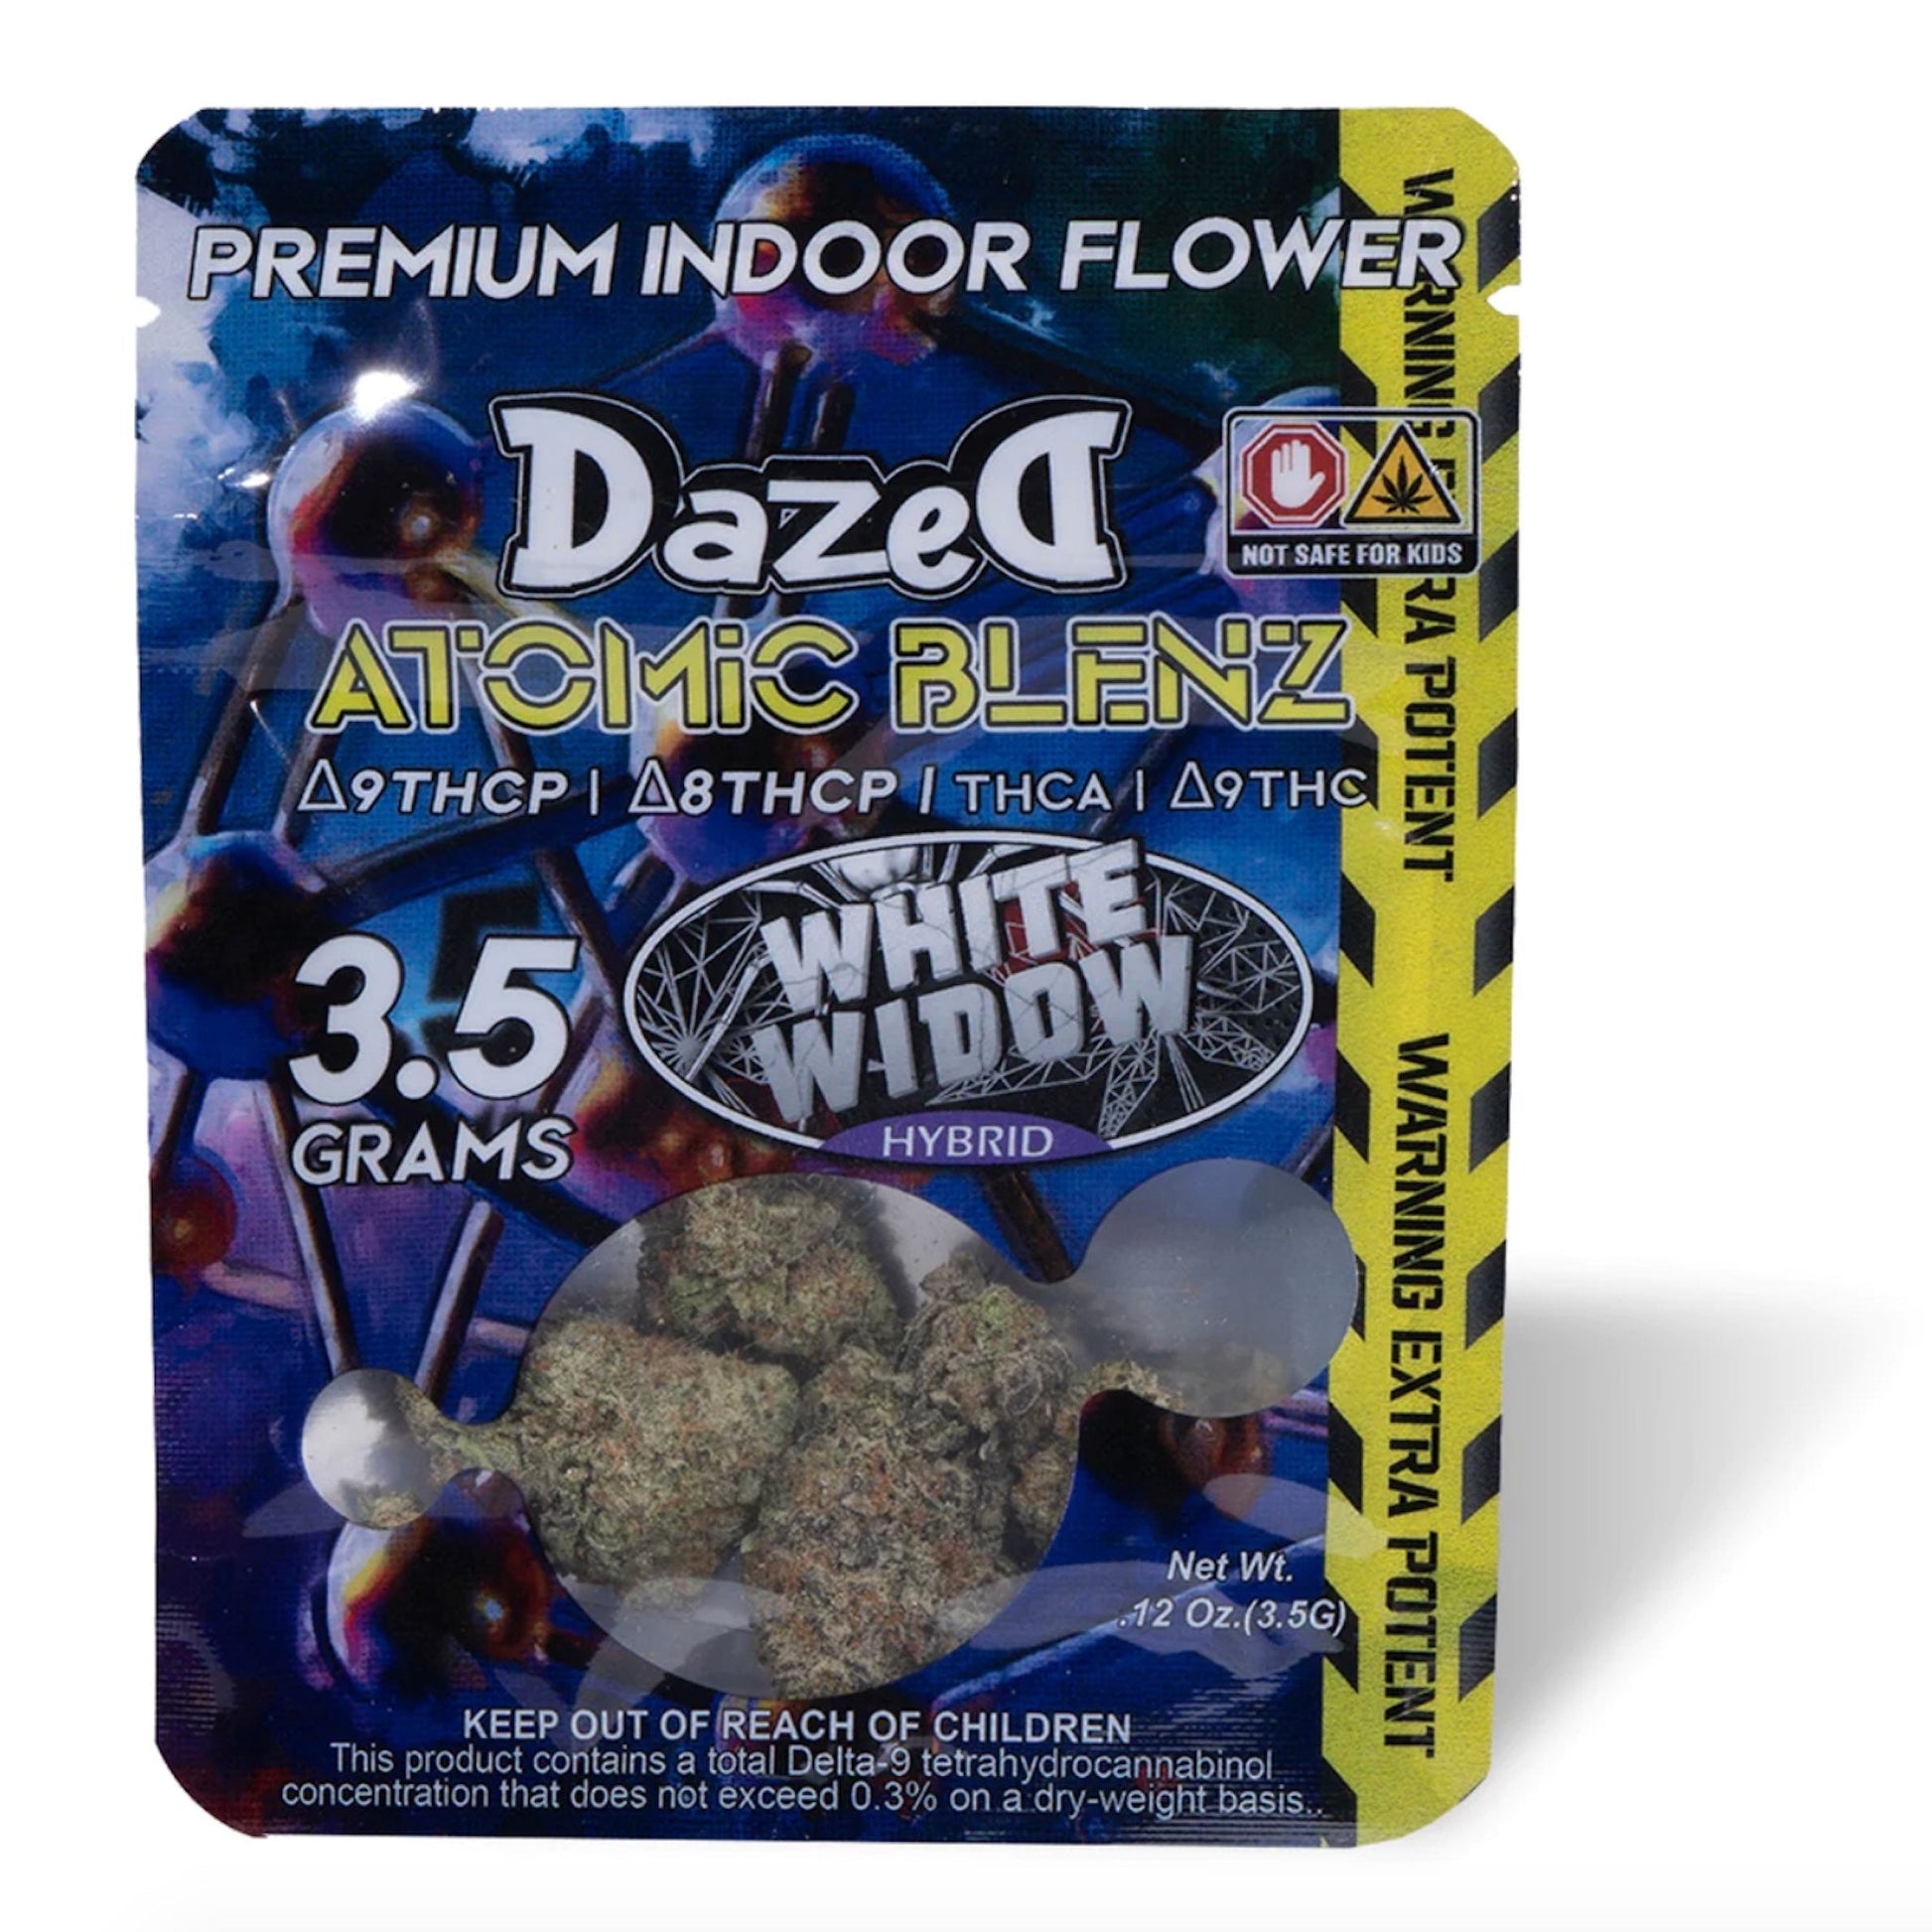 Dazed Atomic Blenz White Widow THC-A Flower - 3.5g